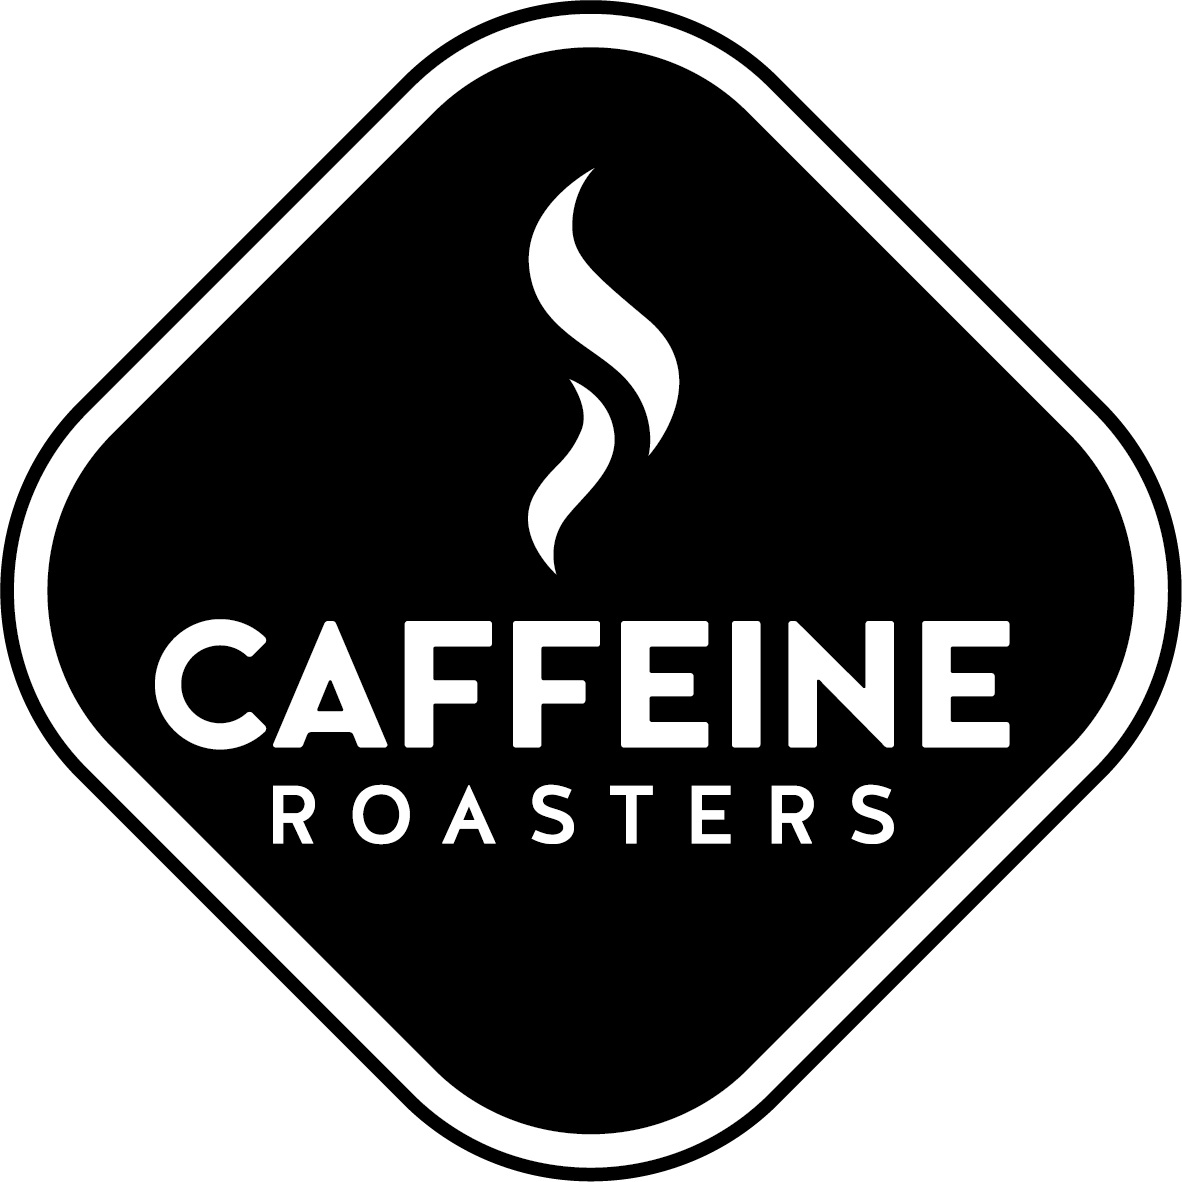  CAFFEINE ROASTERS